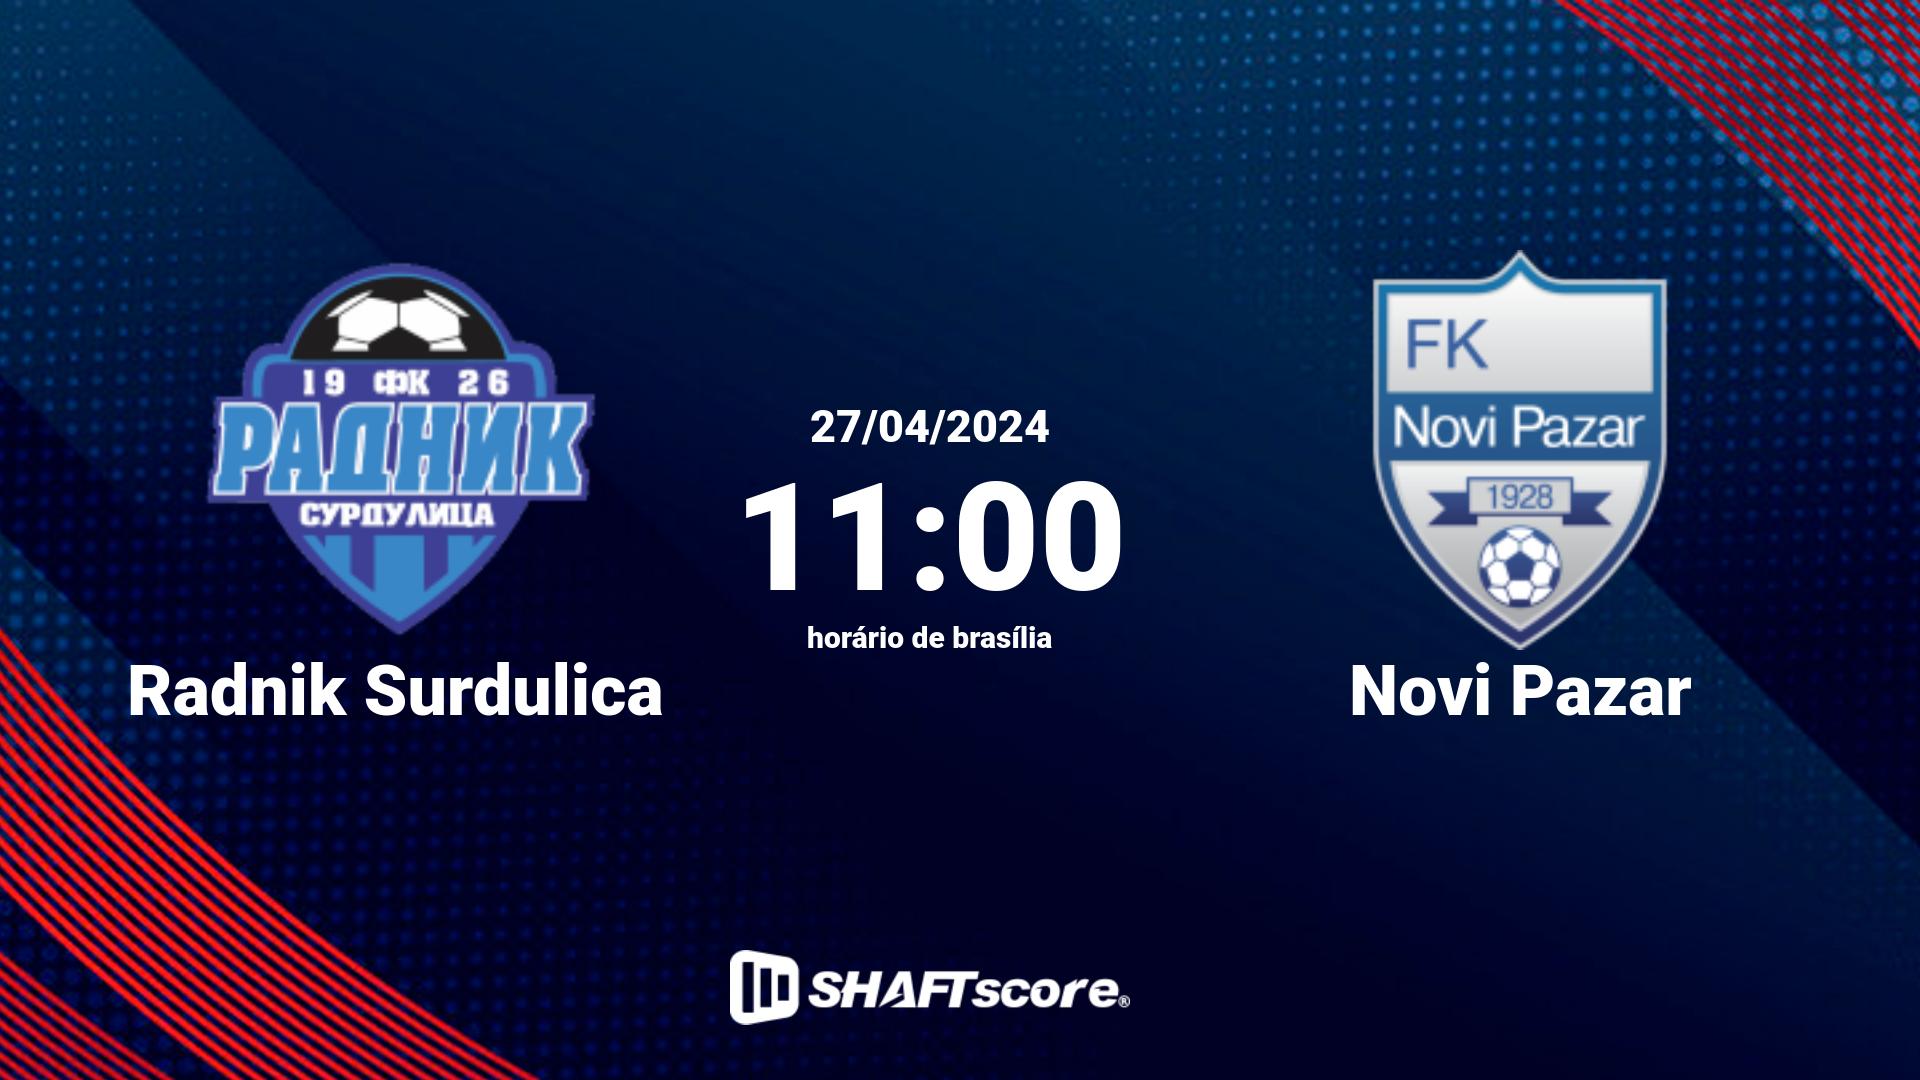 Estatísticas do jogo Radnik Surdulica vs Novi Pazar 27.04 11:00